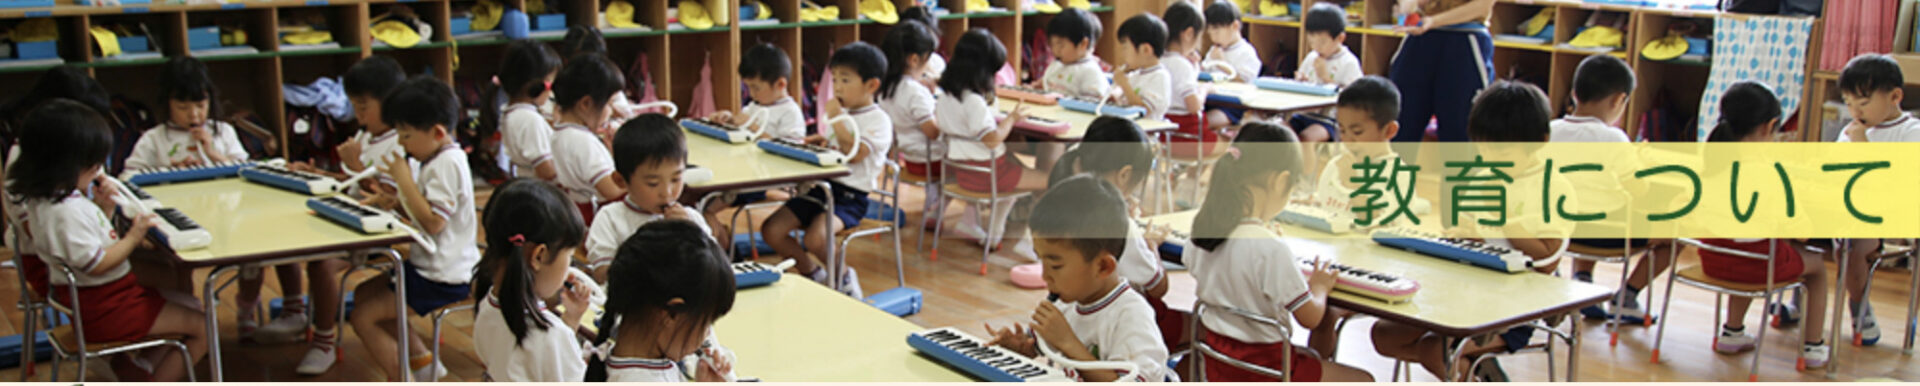 sakai-otoriyouchien-kindergarten